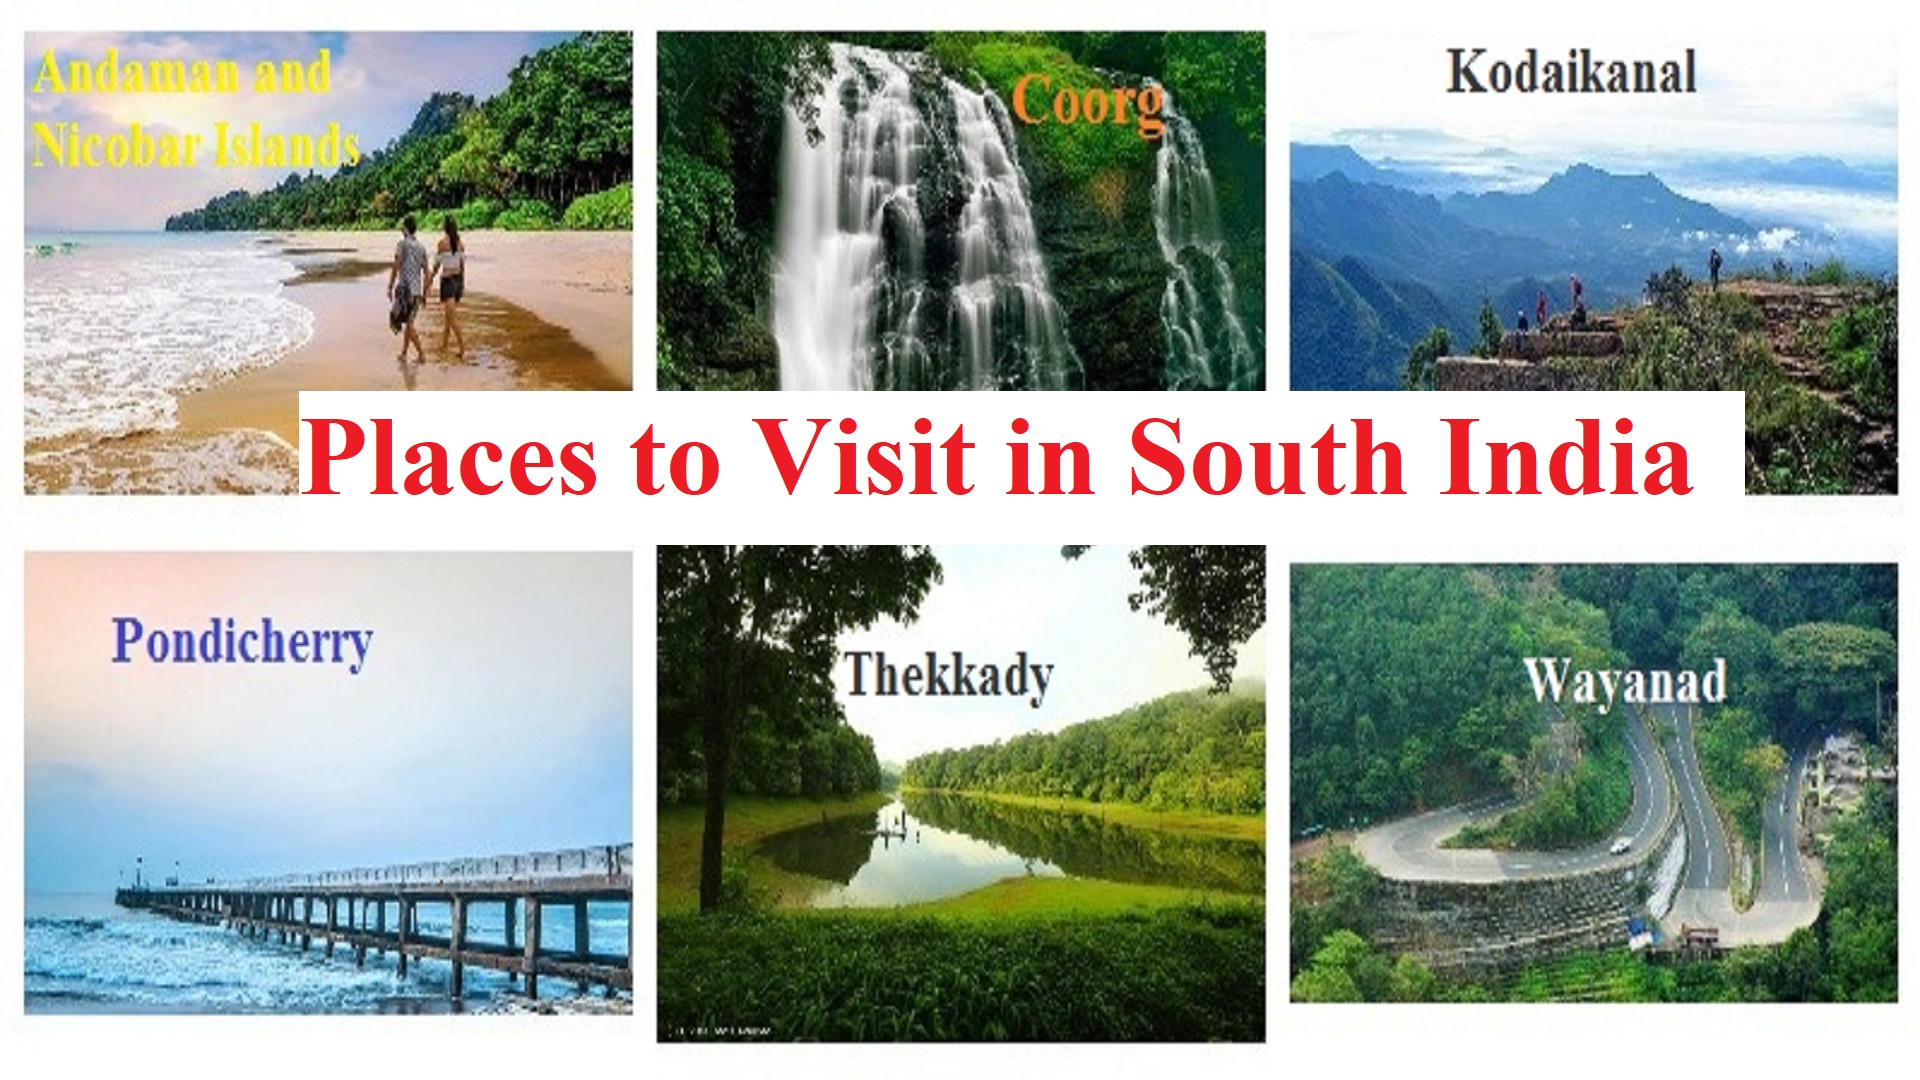 Tourist Destination in South India